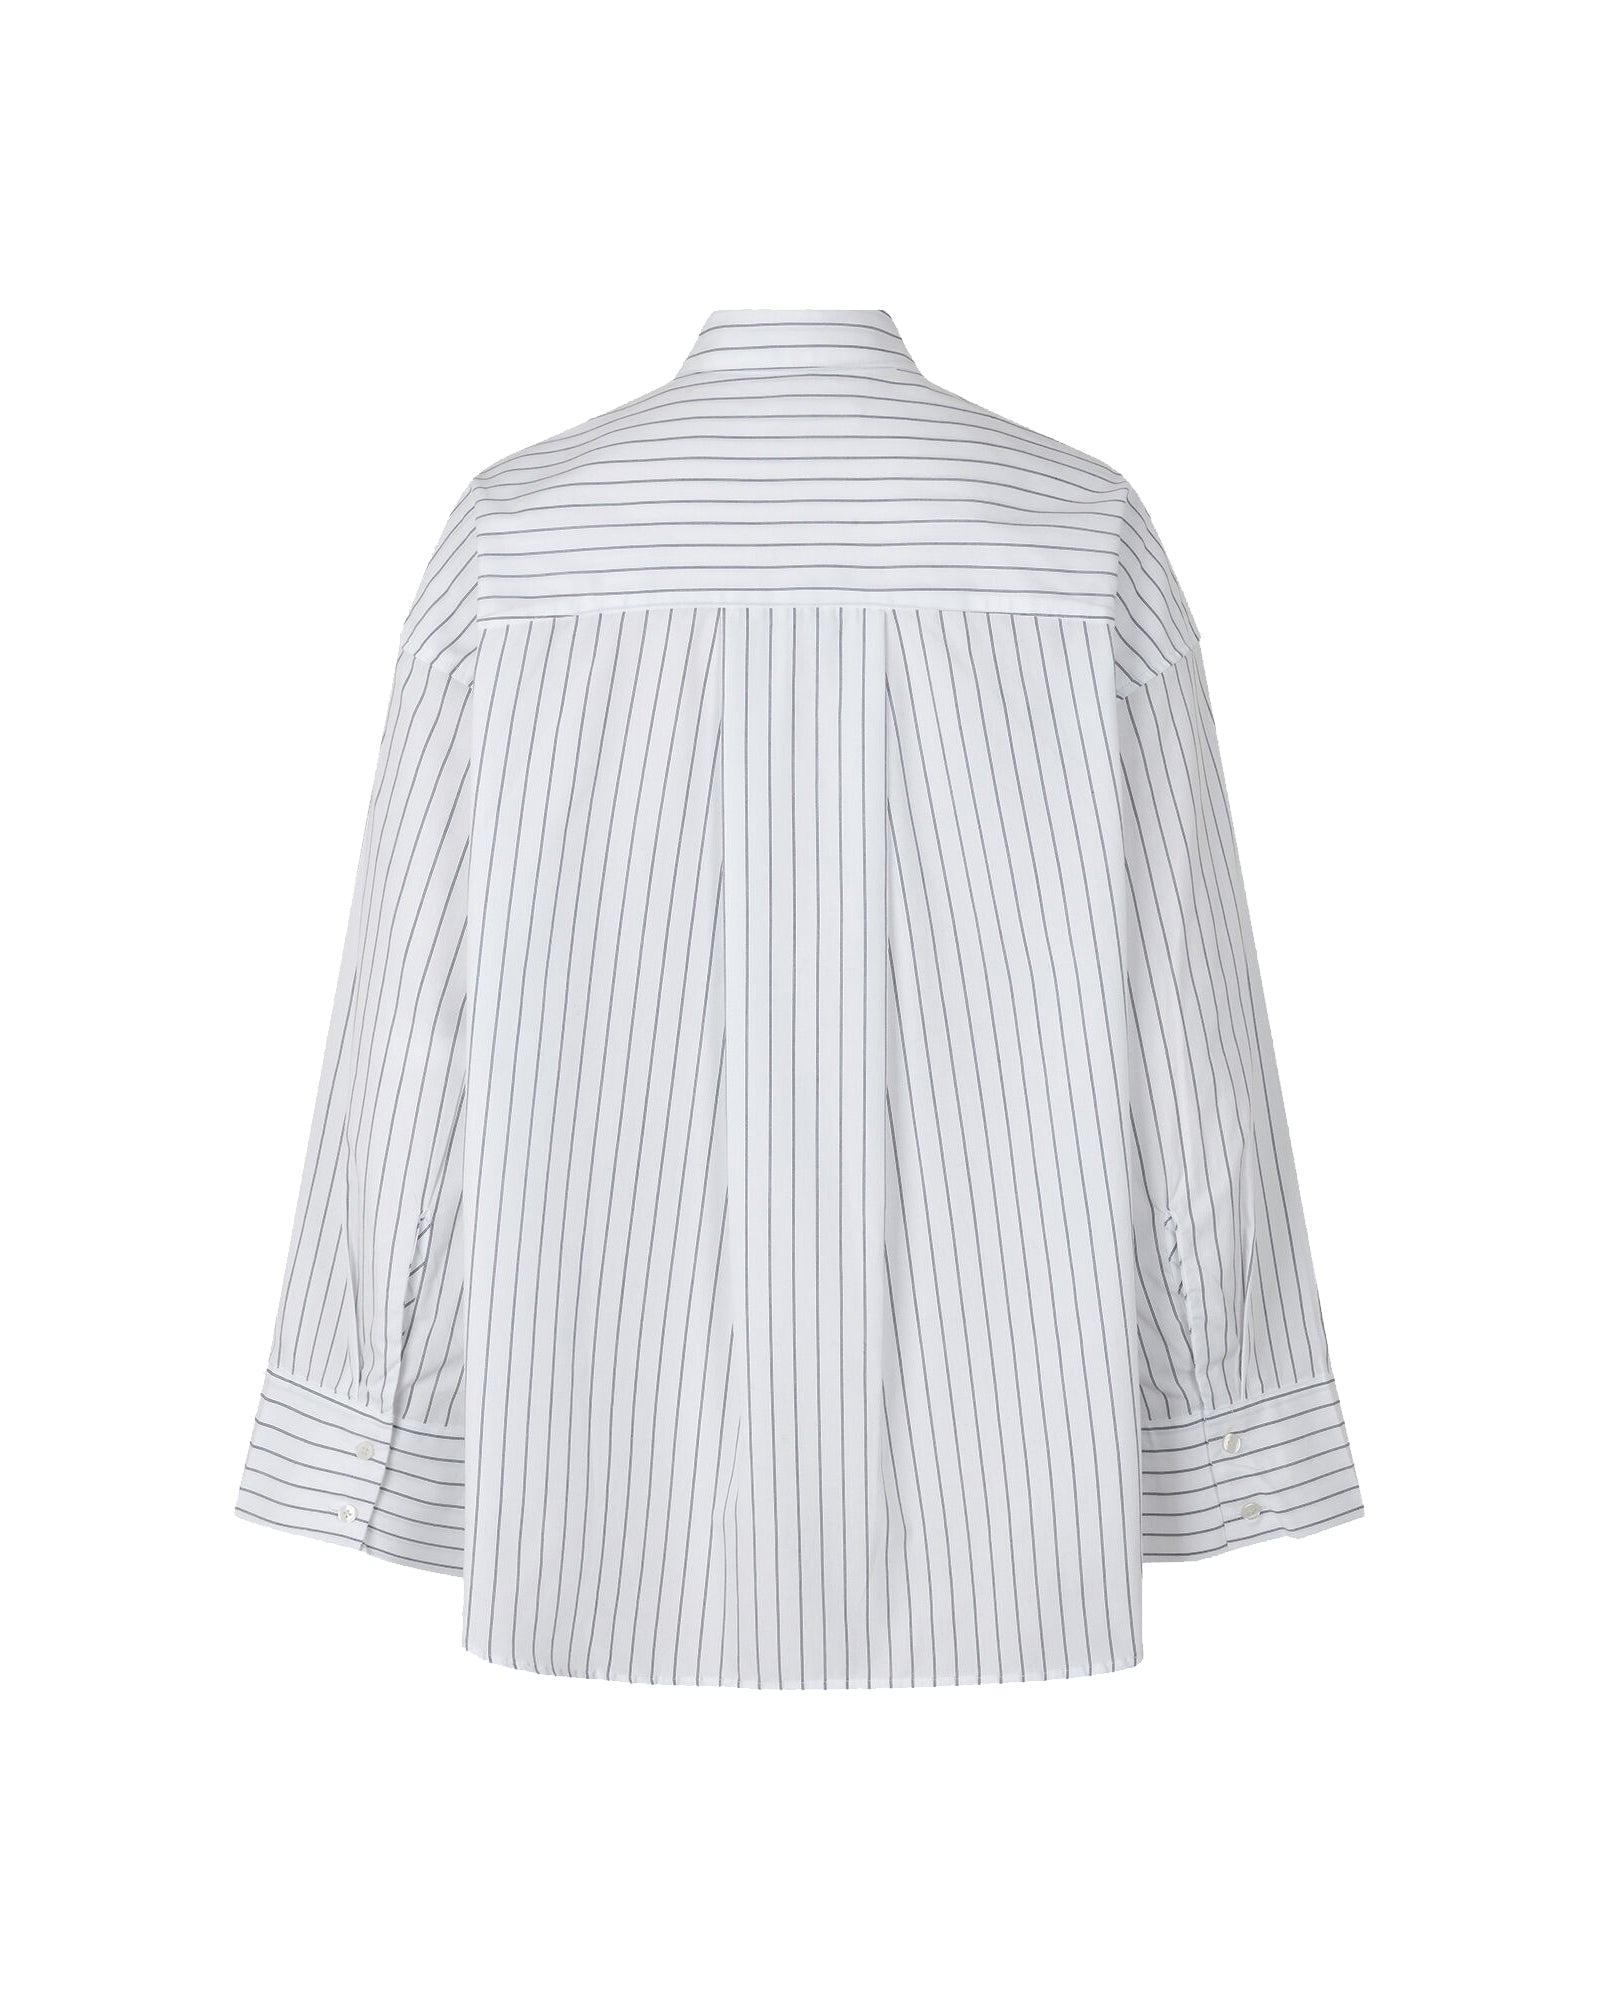 Marika shirt 13072 - Bright white st.